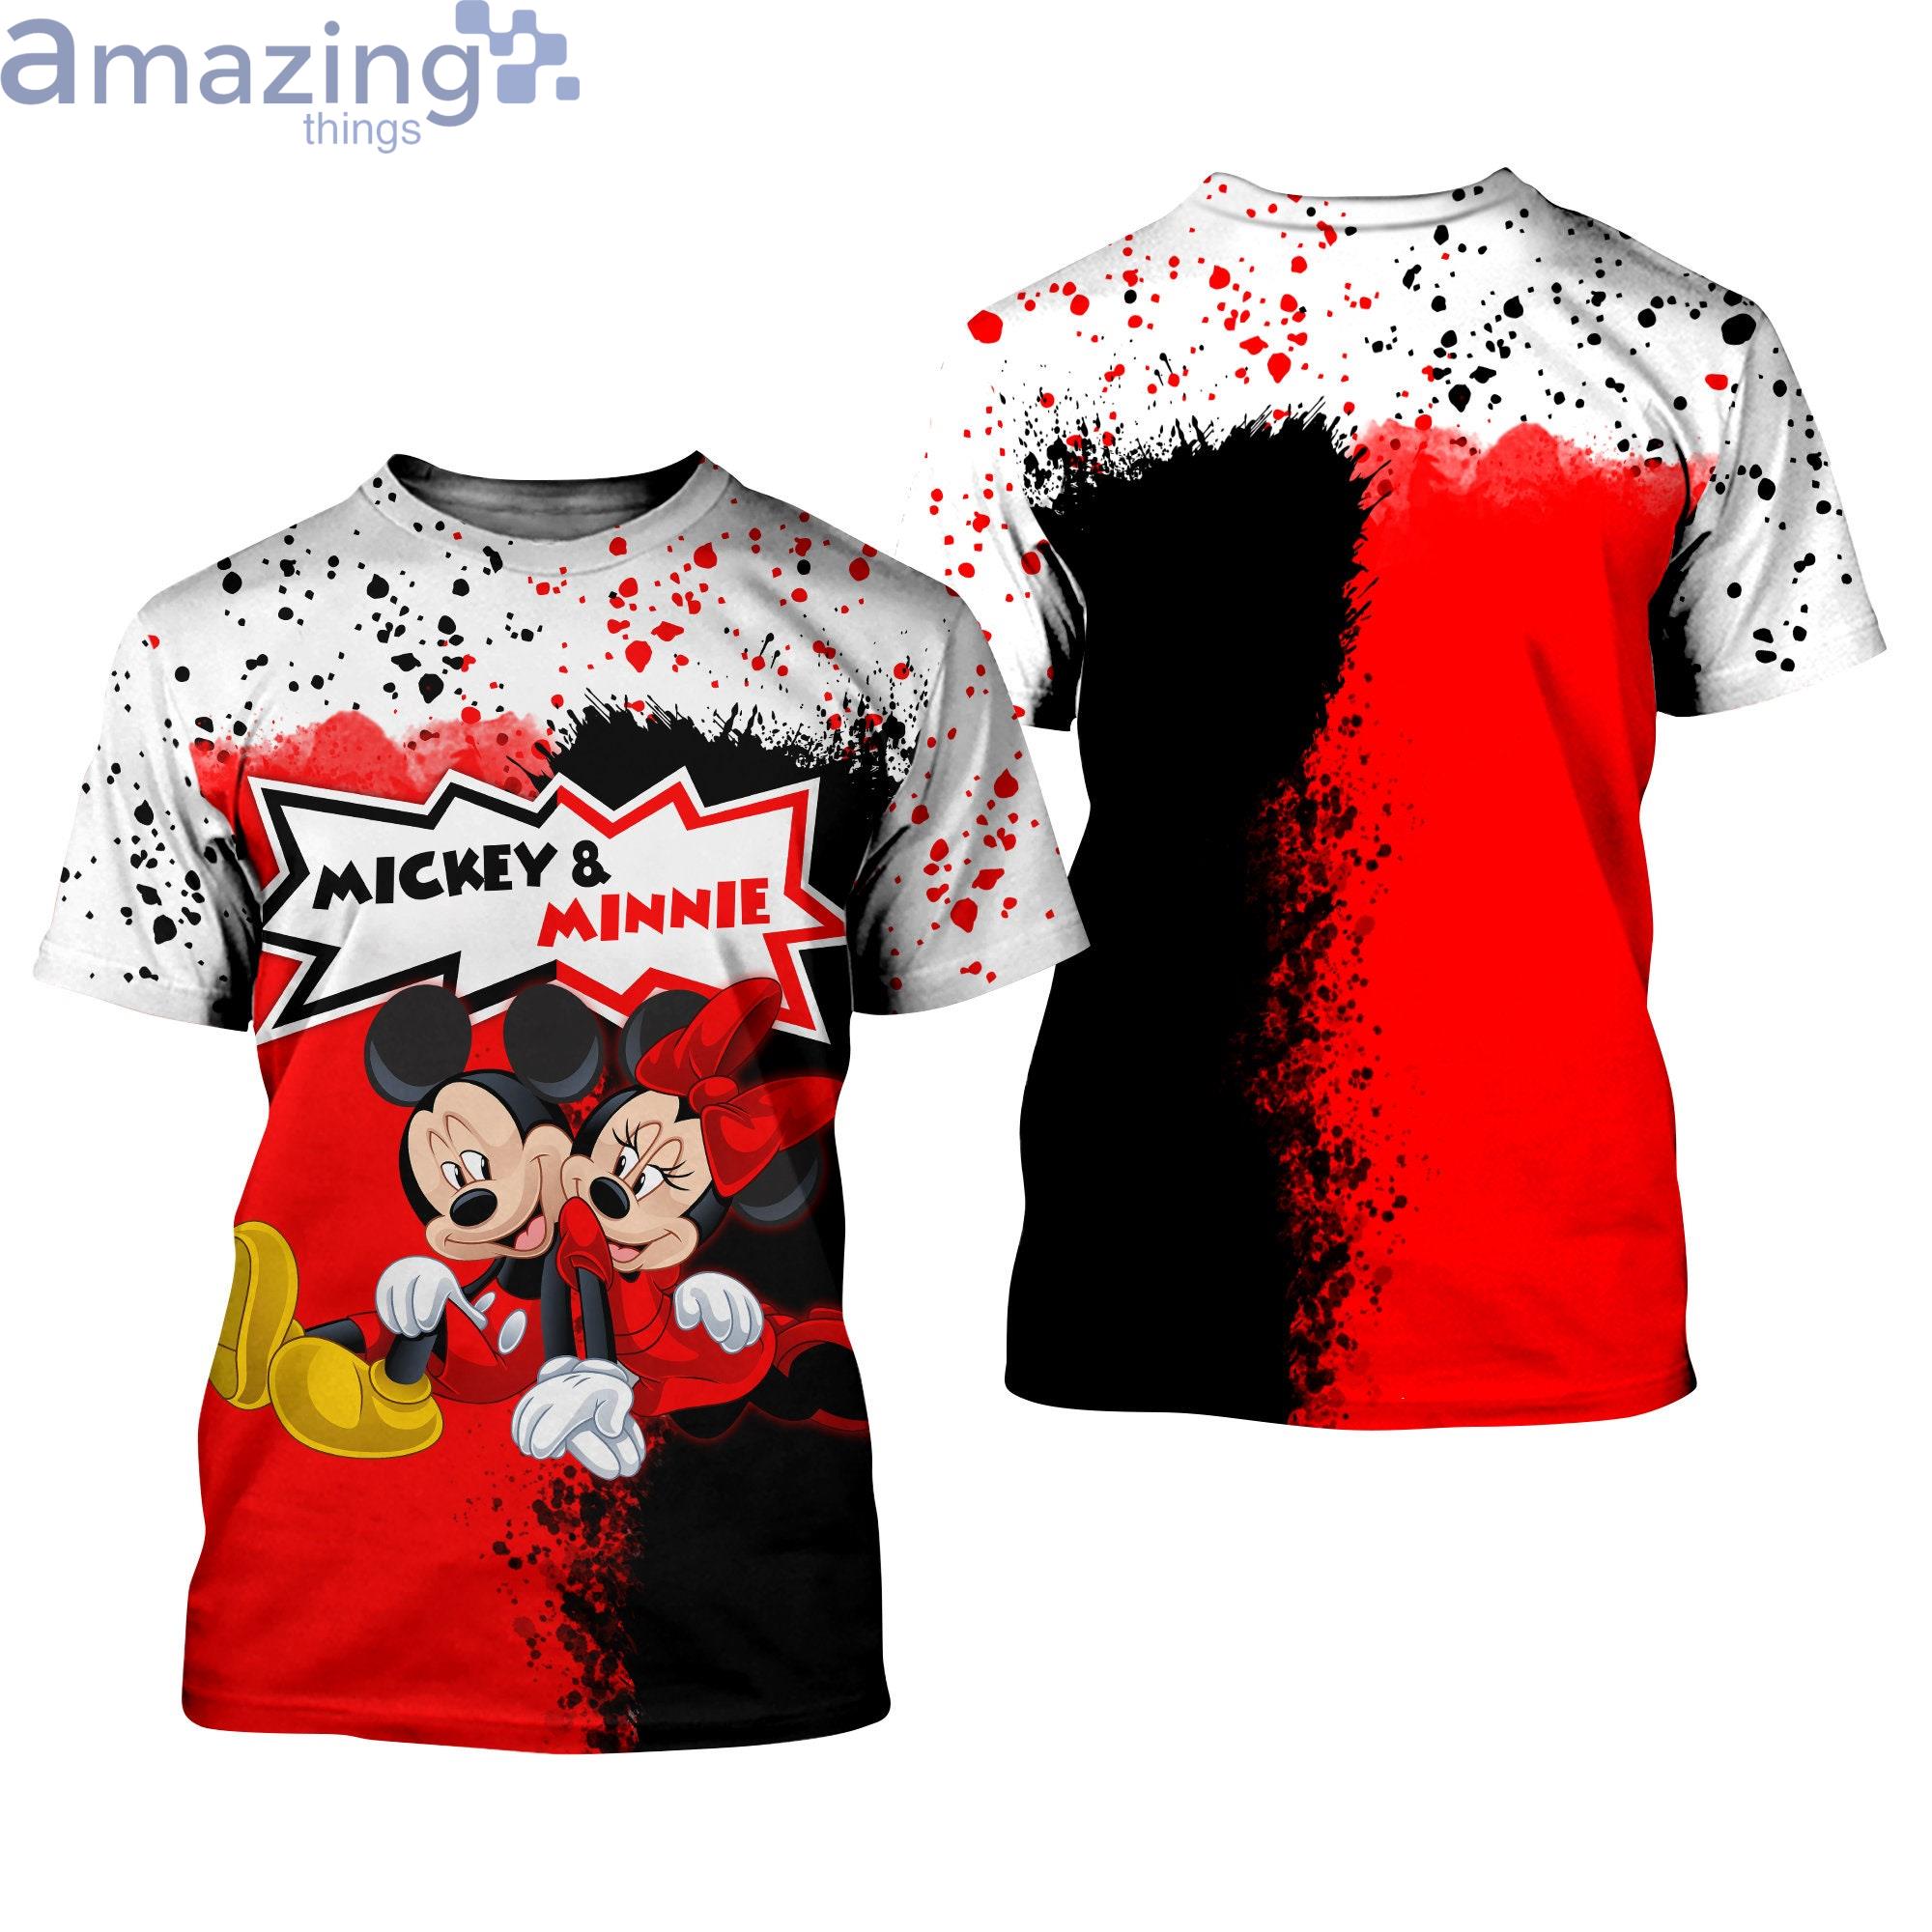 Mickey & Minnie Mouse Red Black Splatter Paint Disney Cartoon 3D T-Shirts Product Photo 1